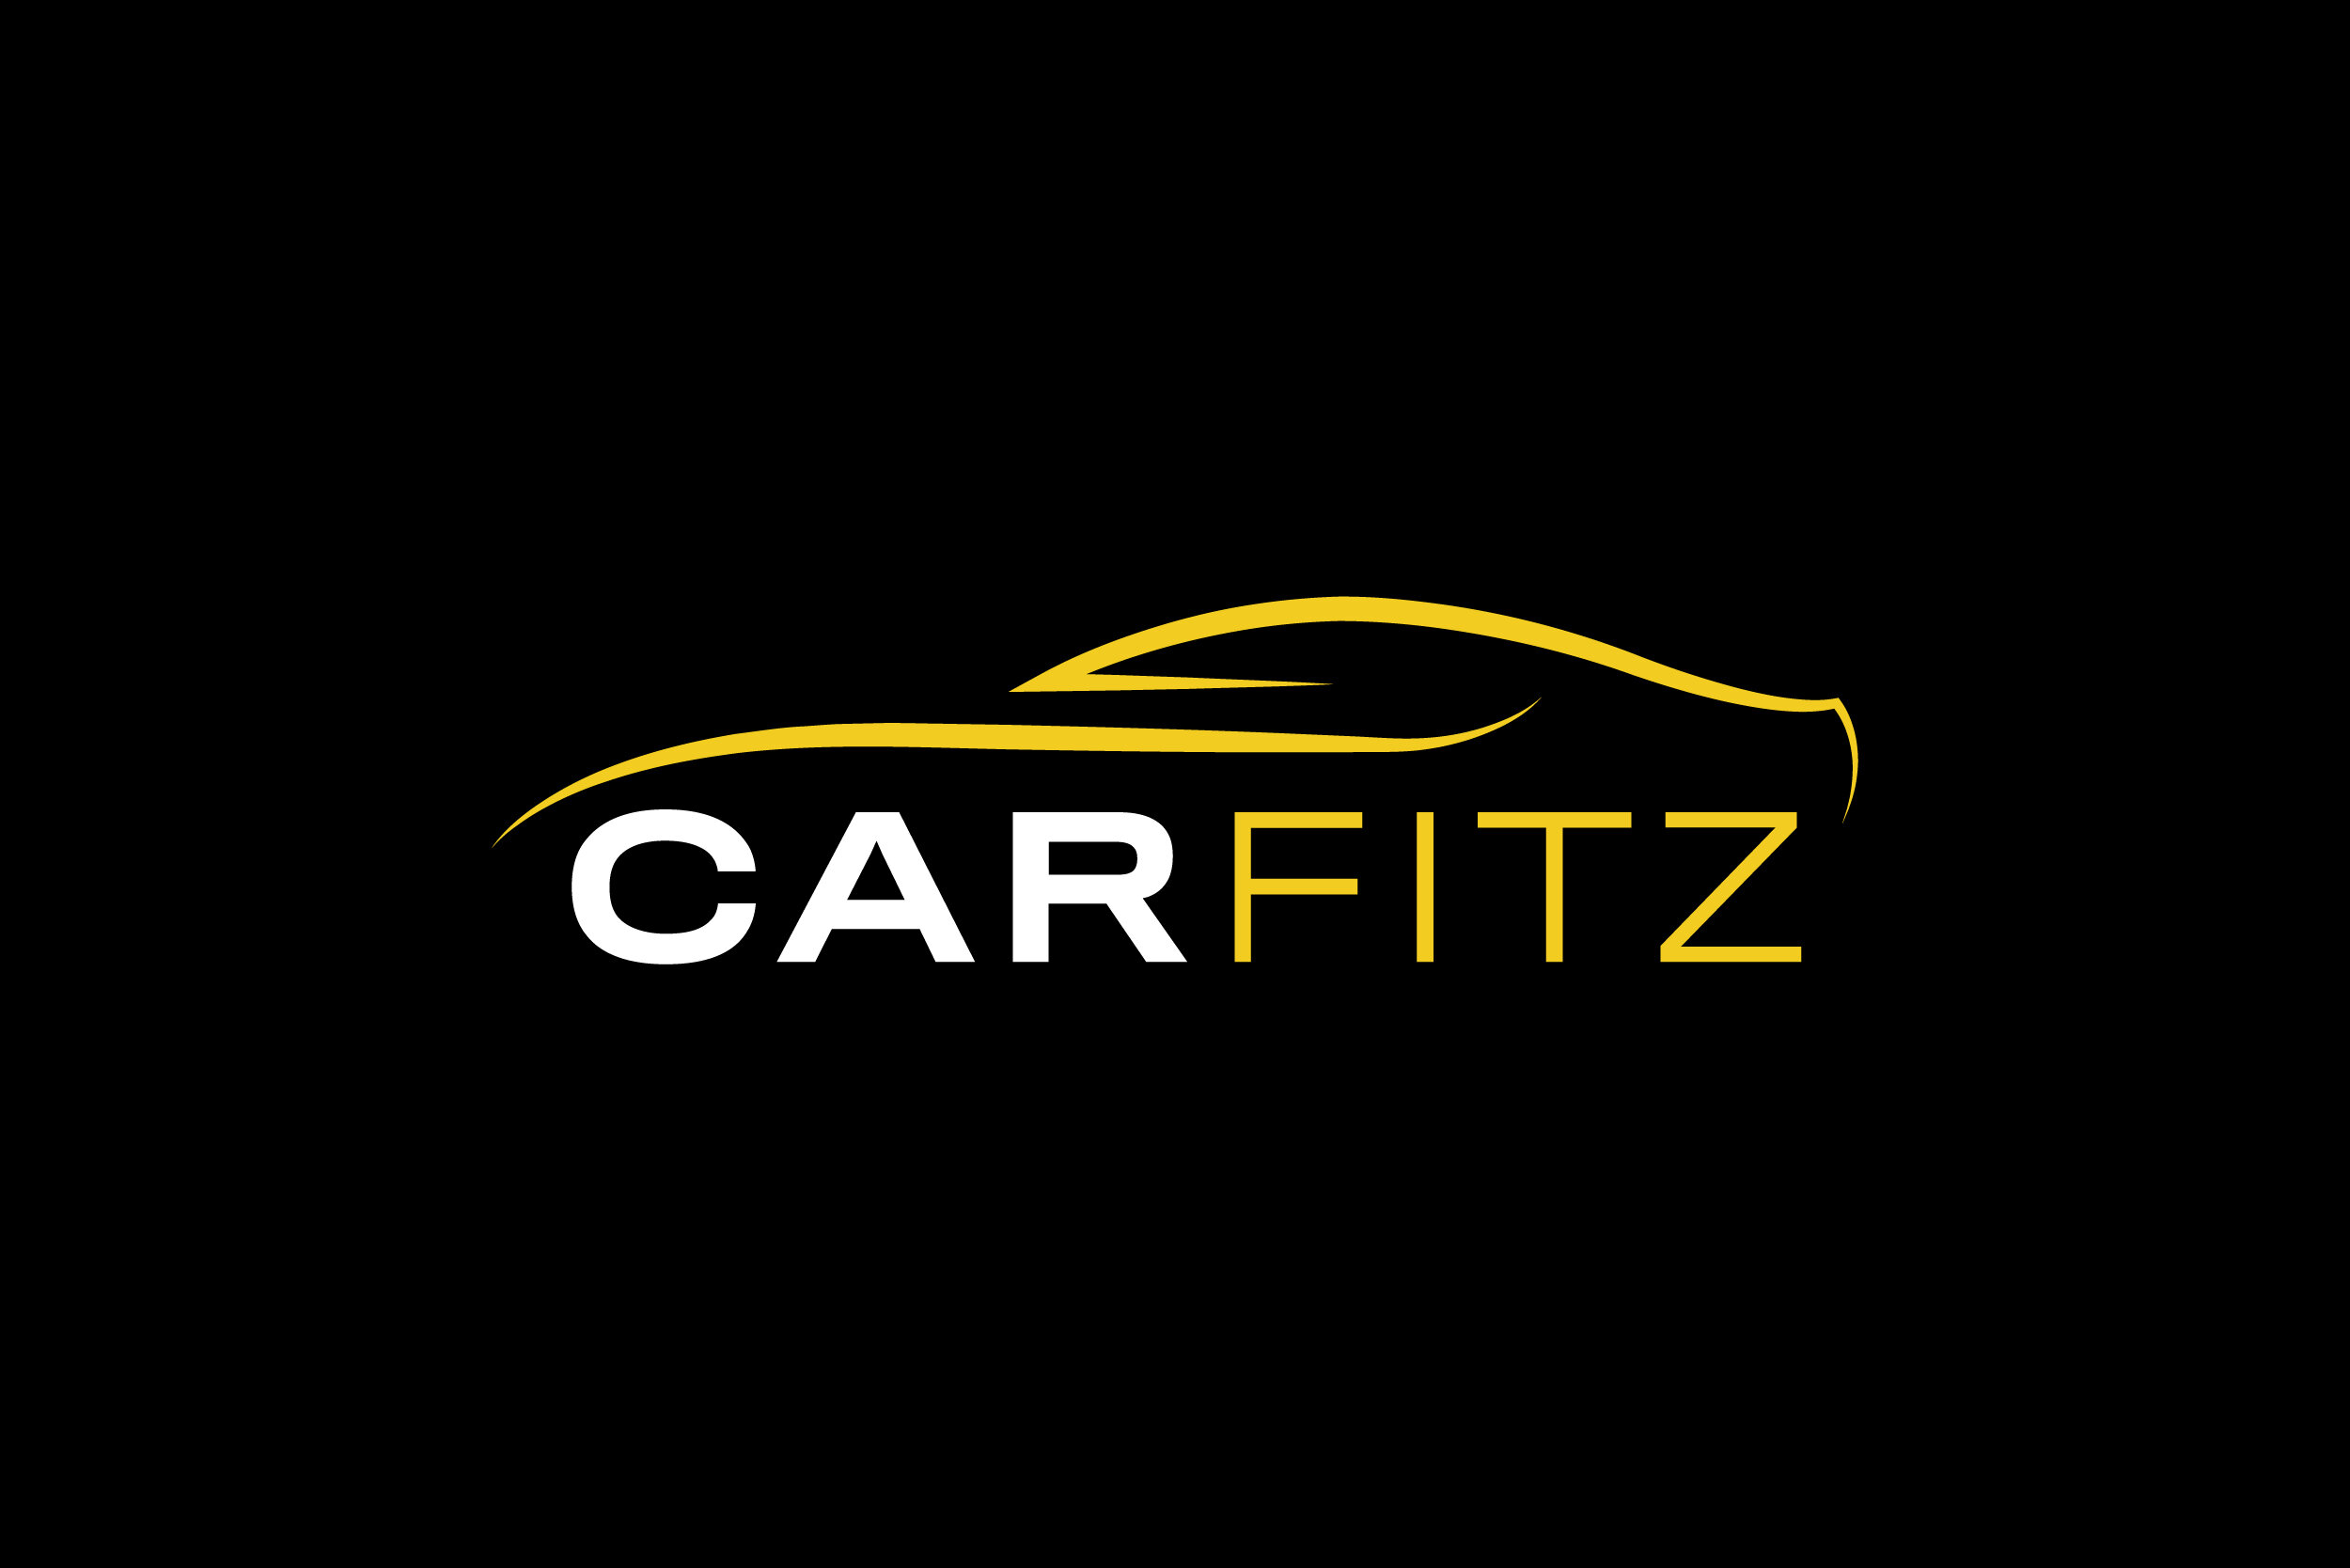 Car Fitz-01.jpg